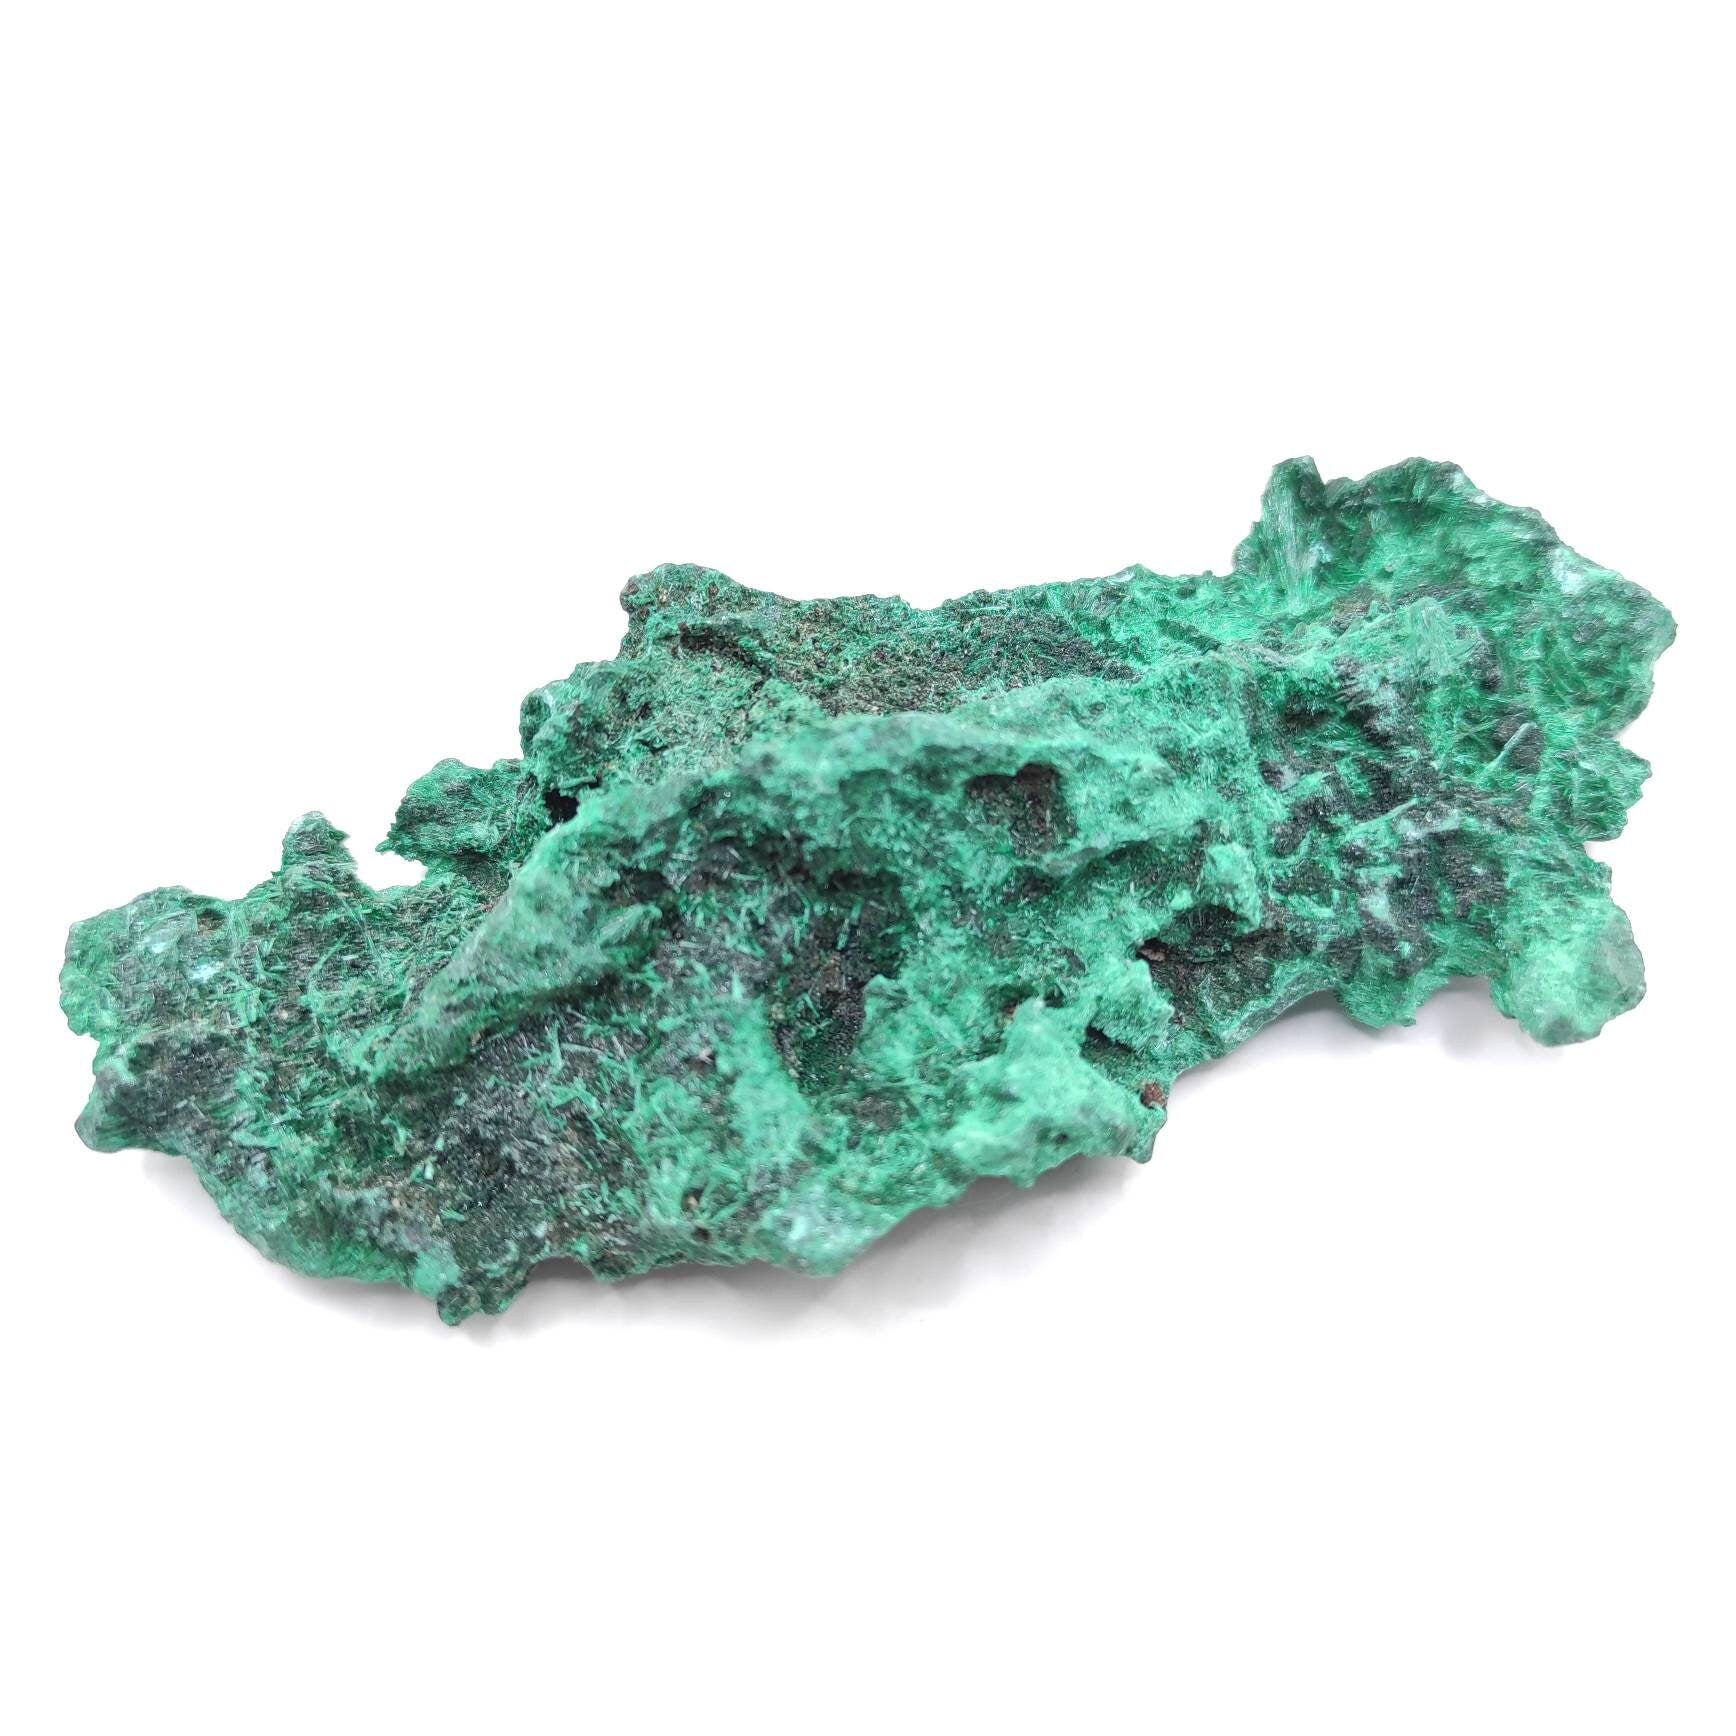 96g Fibrous Malachite - Velvet Malachite from Hubei, China - Natural Malachite Specimen - Raw Minerals - Natural Velvety Malachite Crystal